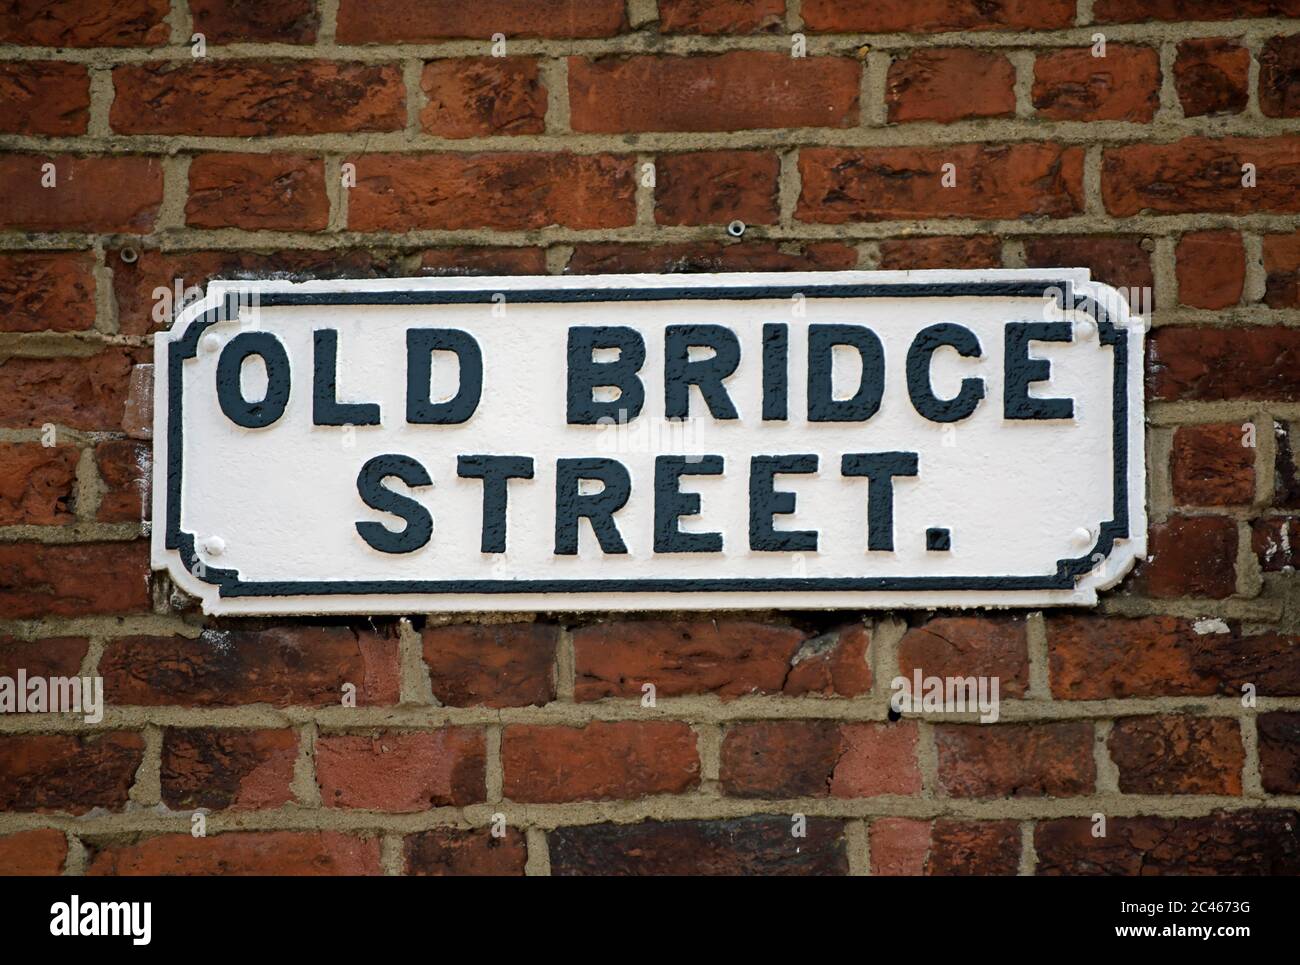 street name sign for old bridge street, hampton wick, southwest london, england Stock Photo